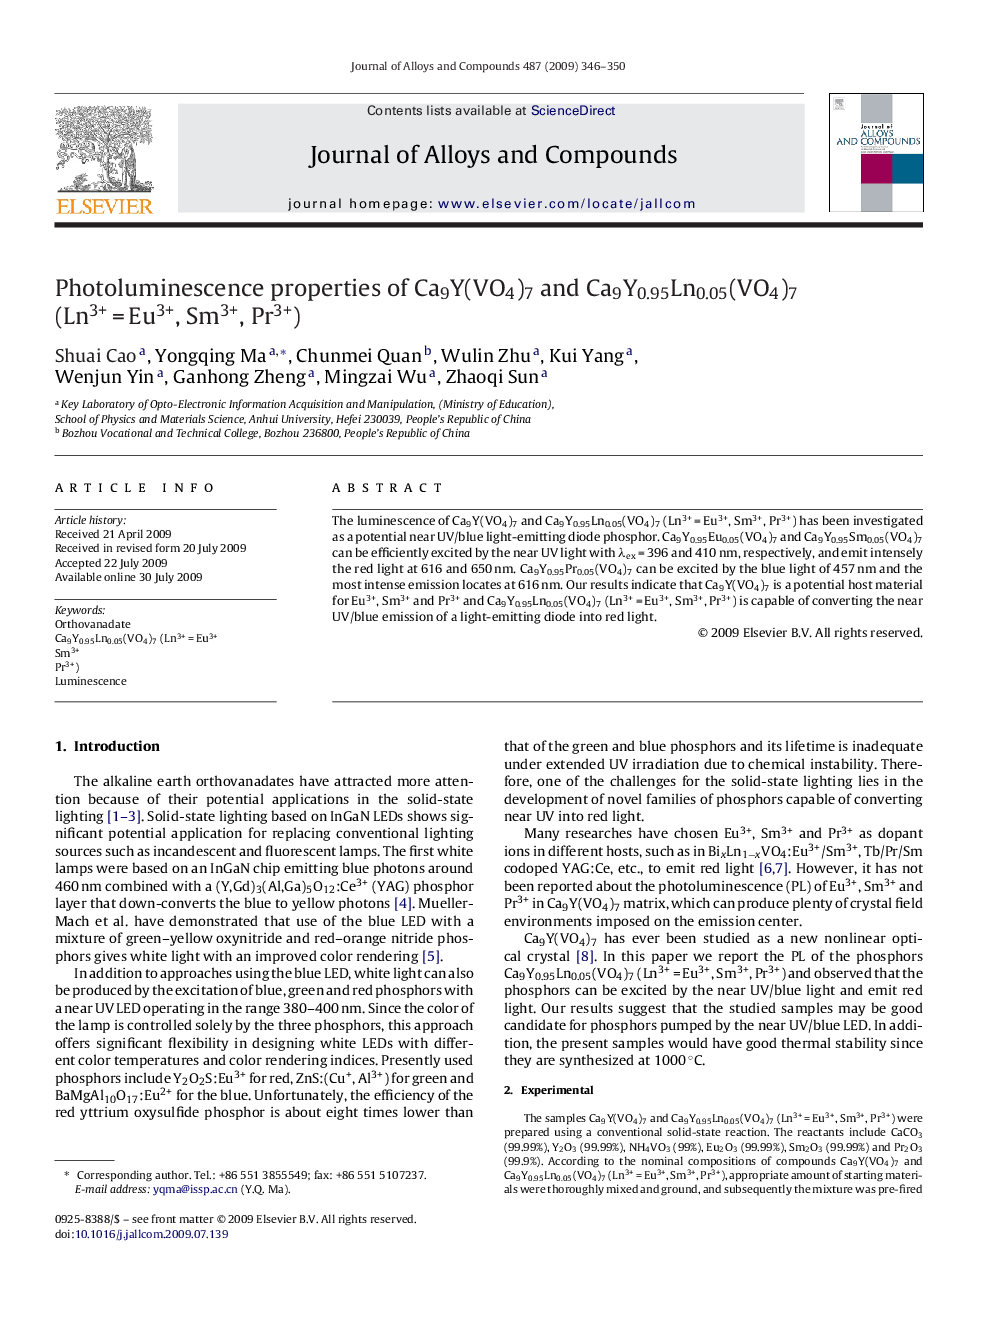 Photoluminescence properties of Ca9Y(VO4)7 and Ca9Y0.95Ln0.05(VO4)7 (Ln3+ = Eu3+, Sm3+, Pr3+)